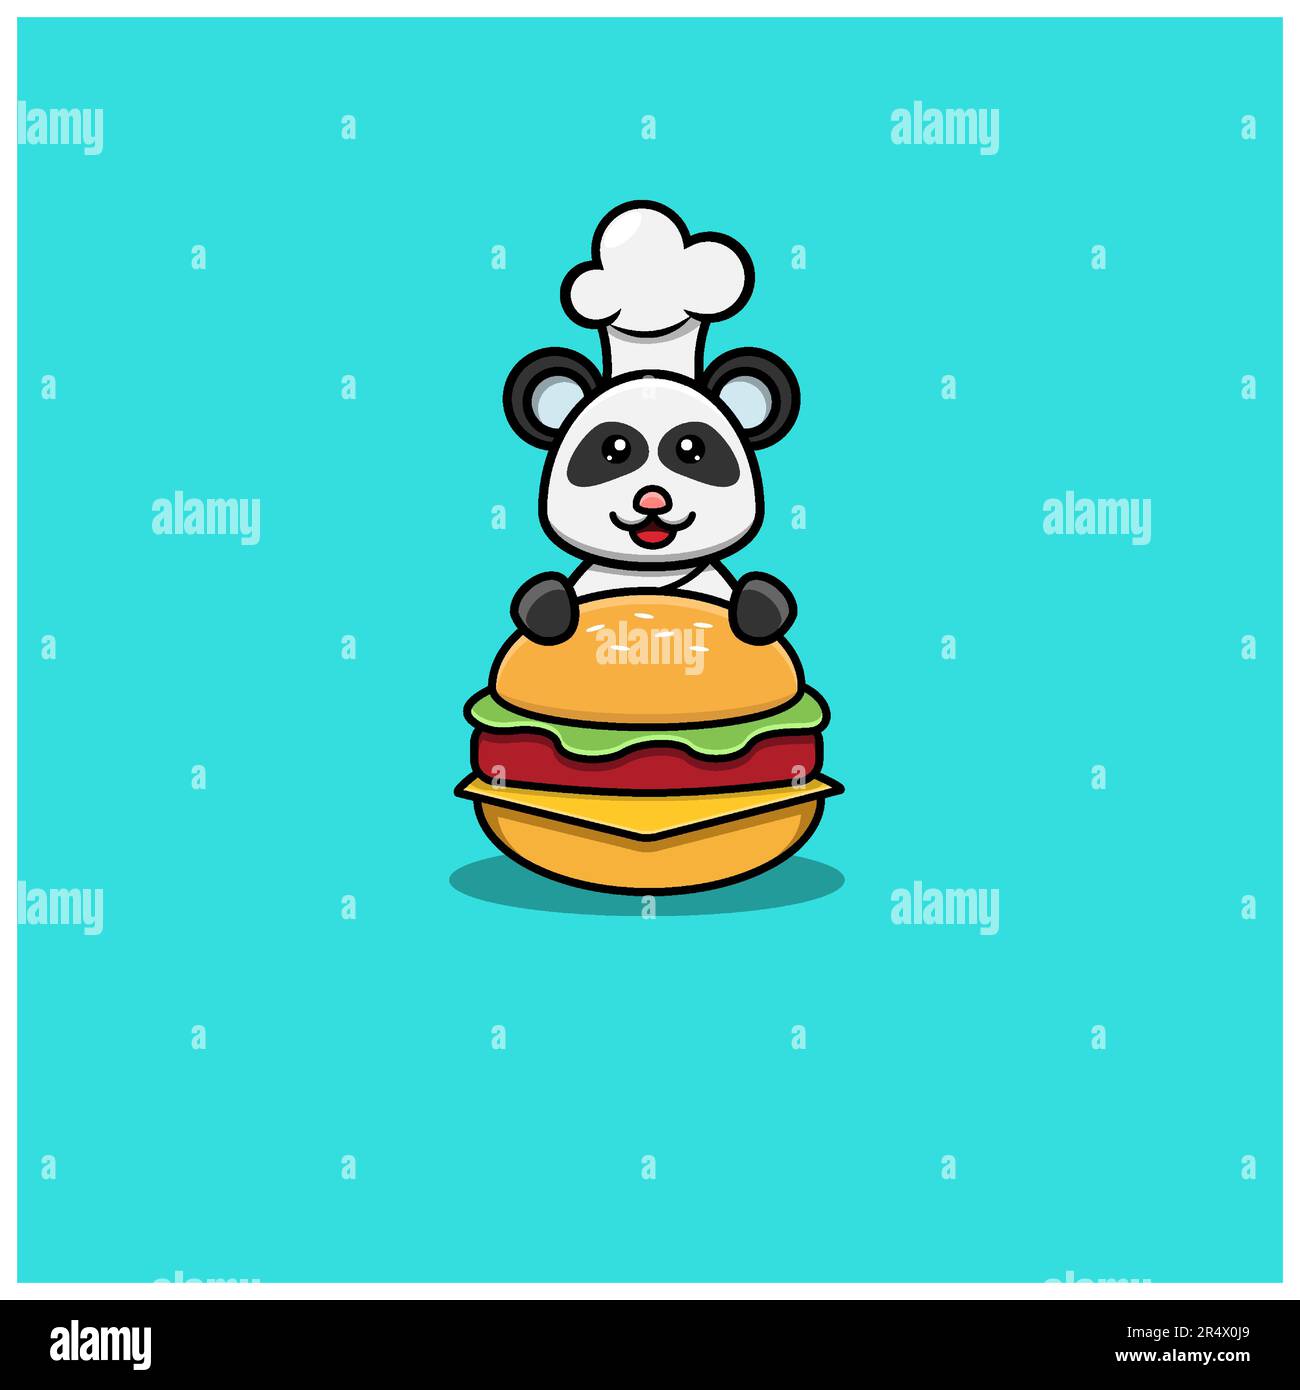 Süße Baby-Koch-Panda Auf Burger. Charakter, Logo, Symbol Und Inspiration Design. Vektor Und Illustration. Stock Vektor